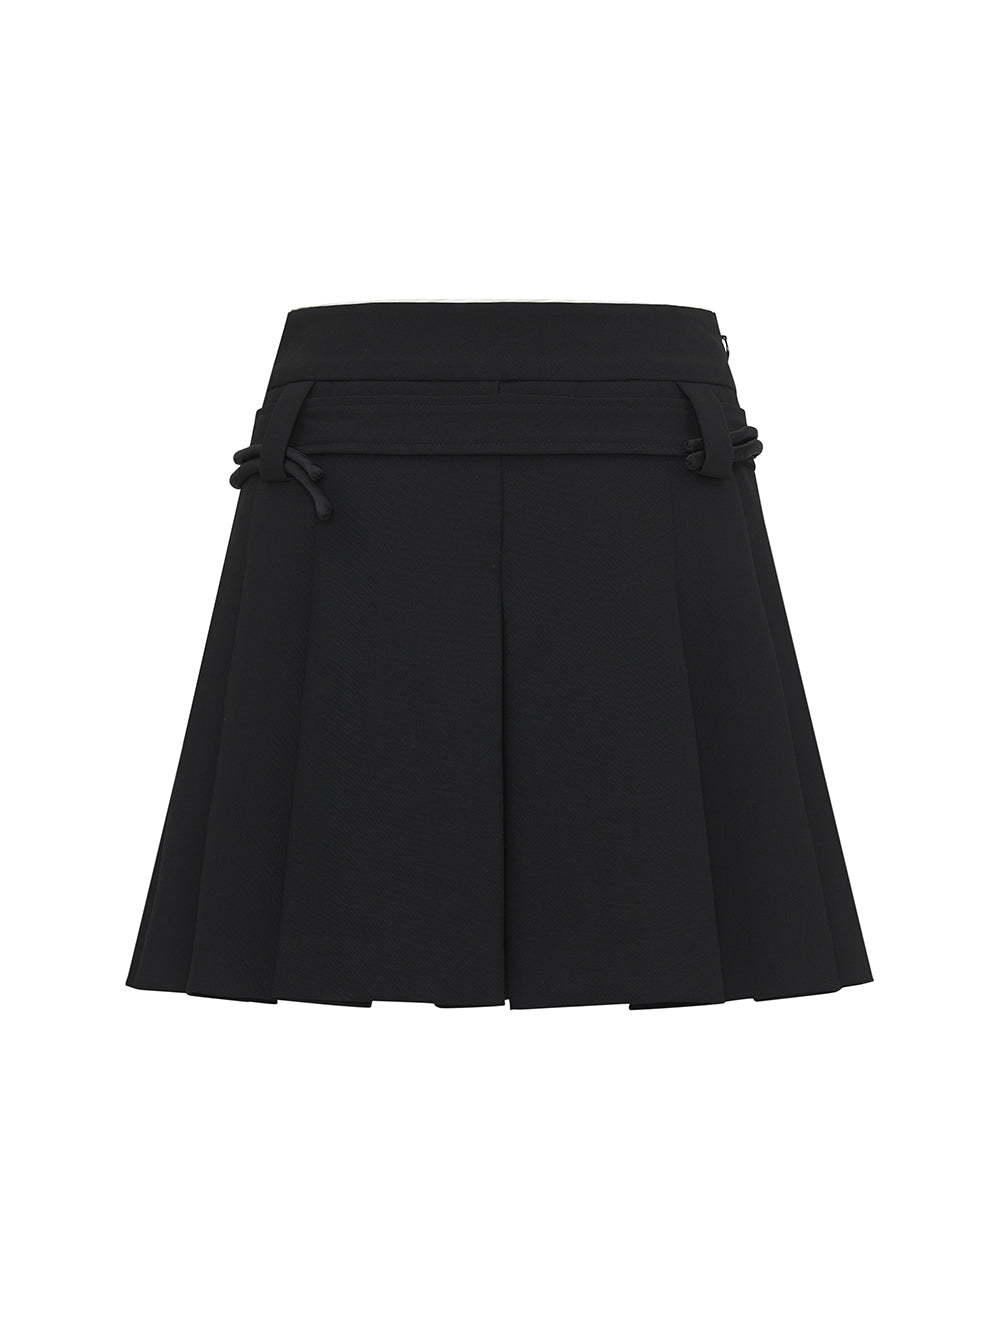 MUKZIN Classic Versatile Black Slimming Pleated Skirt